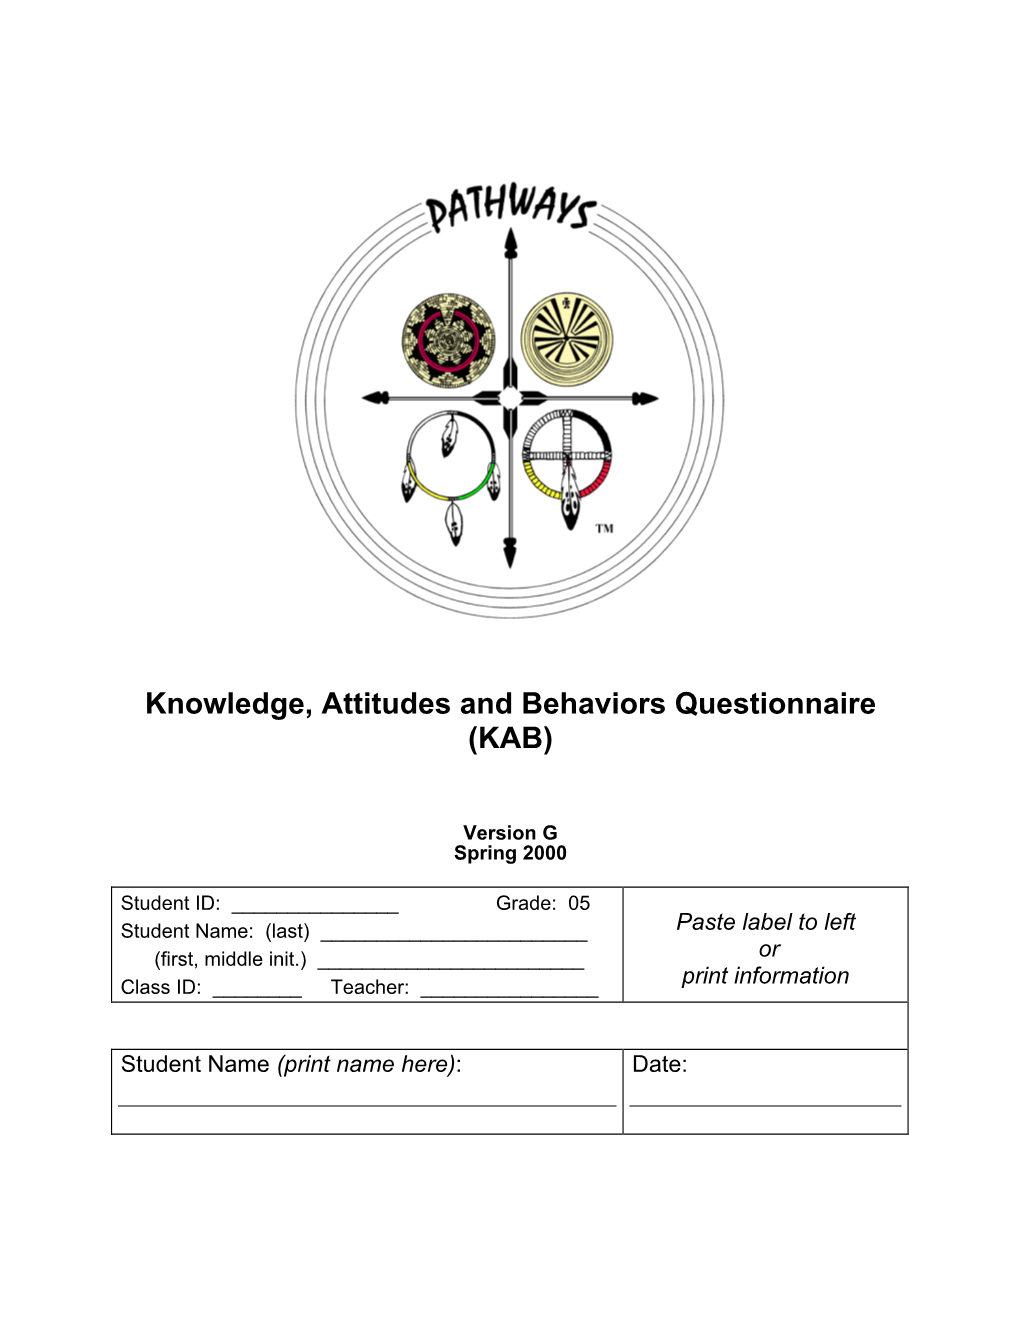 Knowledge, Attitudes and Behaviors Questionnaire (KAB)